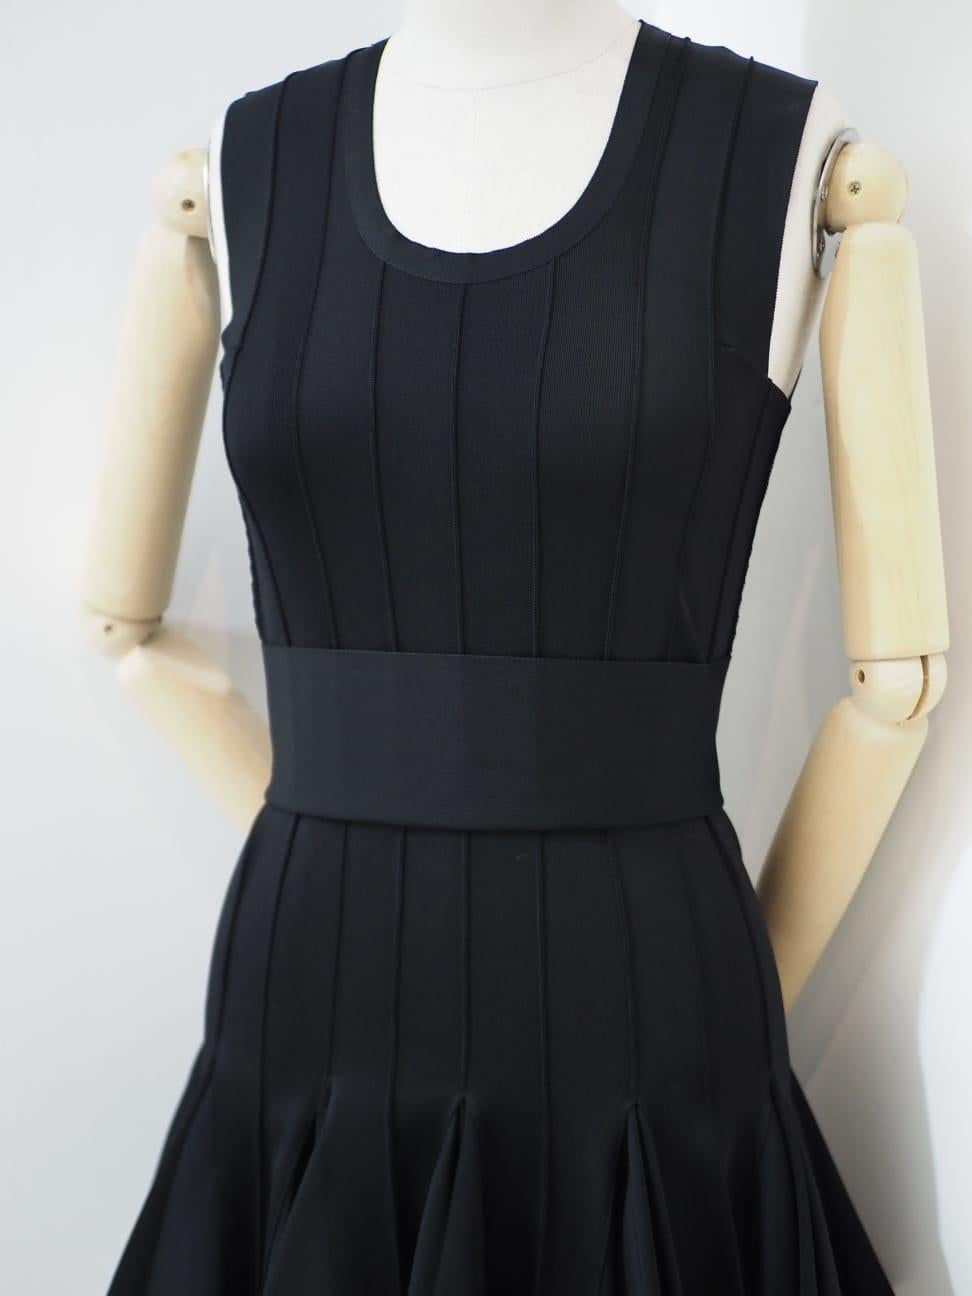 Balmain black dress For Sale 1